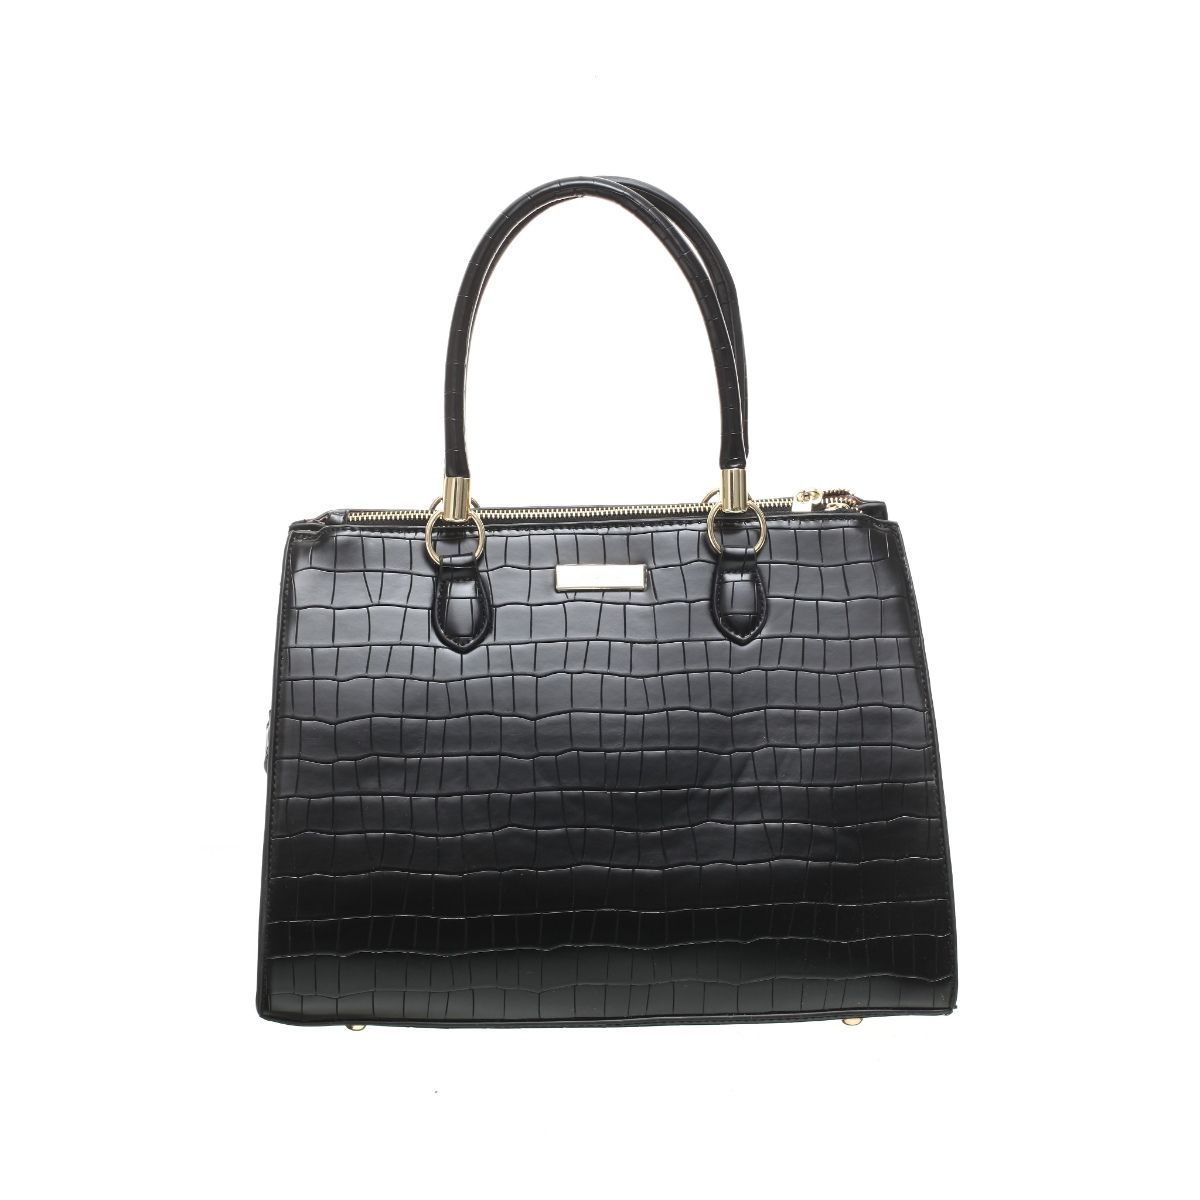 Buy BESSIE LONDON Women'S Pu Croc Textured Formal Handbag With Addtional  Ditachable Stram (Green, 38Cm*15Cm*26Cm) at Amazon.in